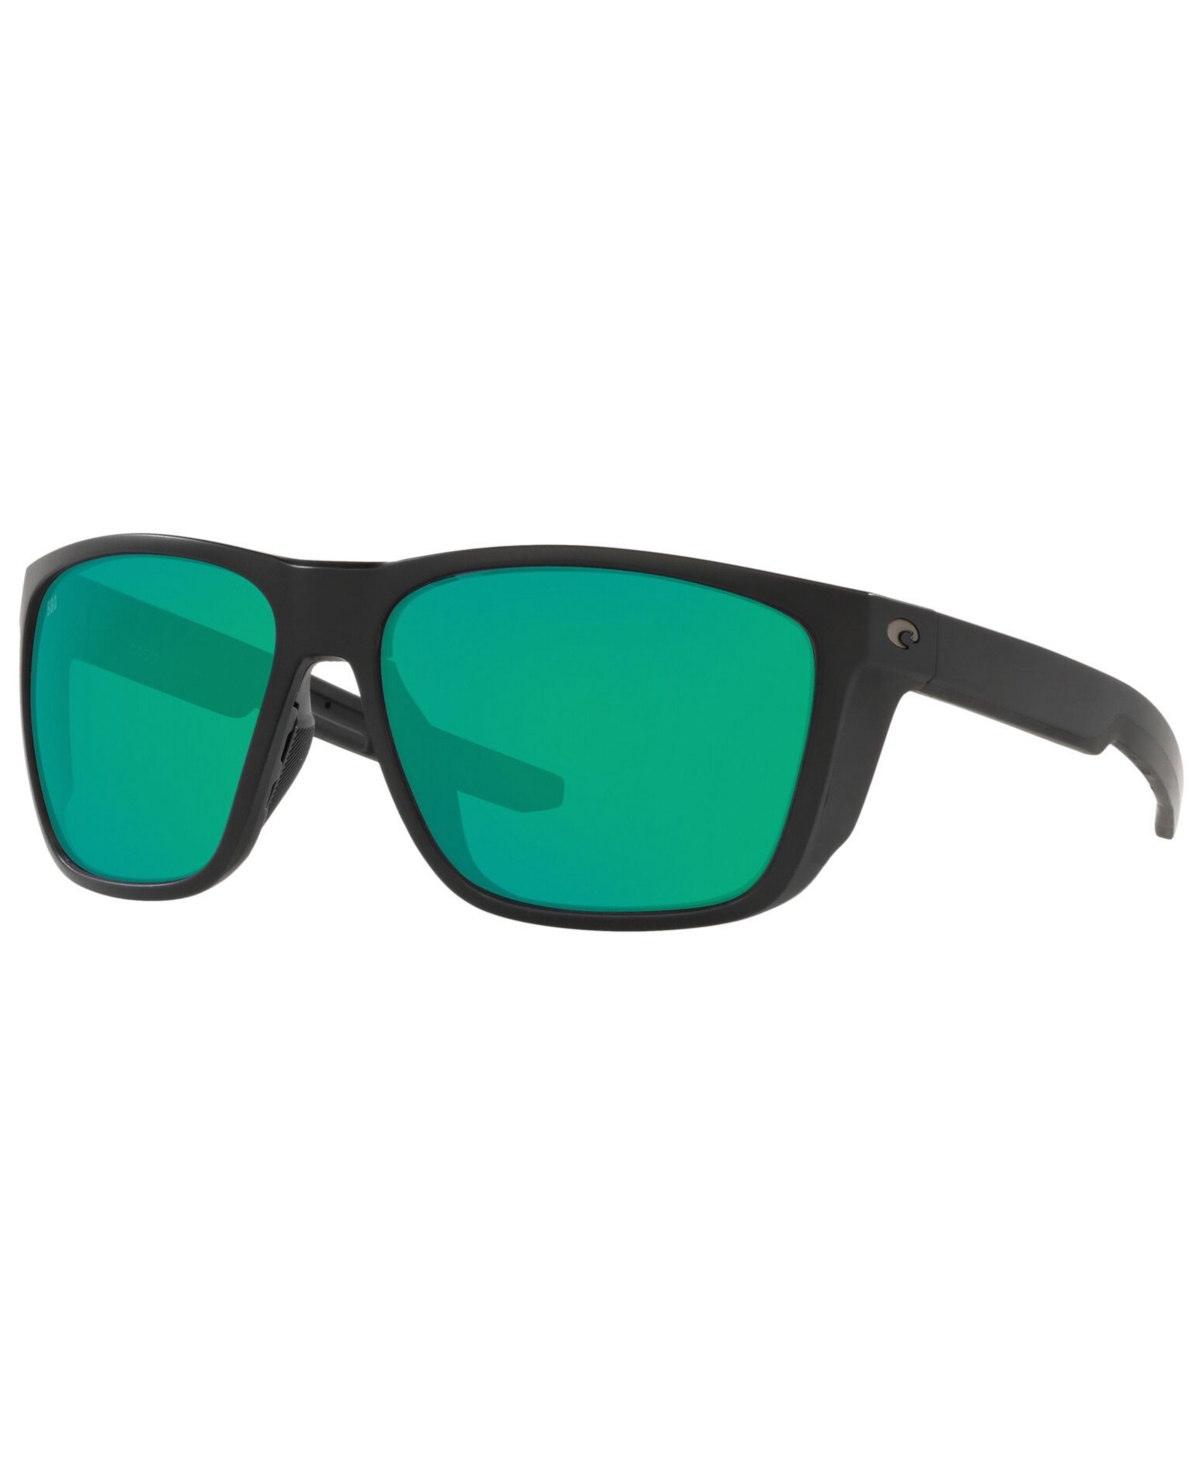 Ferg Xl Polarized Sunglasses, 6S9012 62 - MATTE BLACK/GREEN MIRROR G